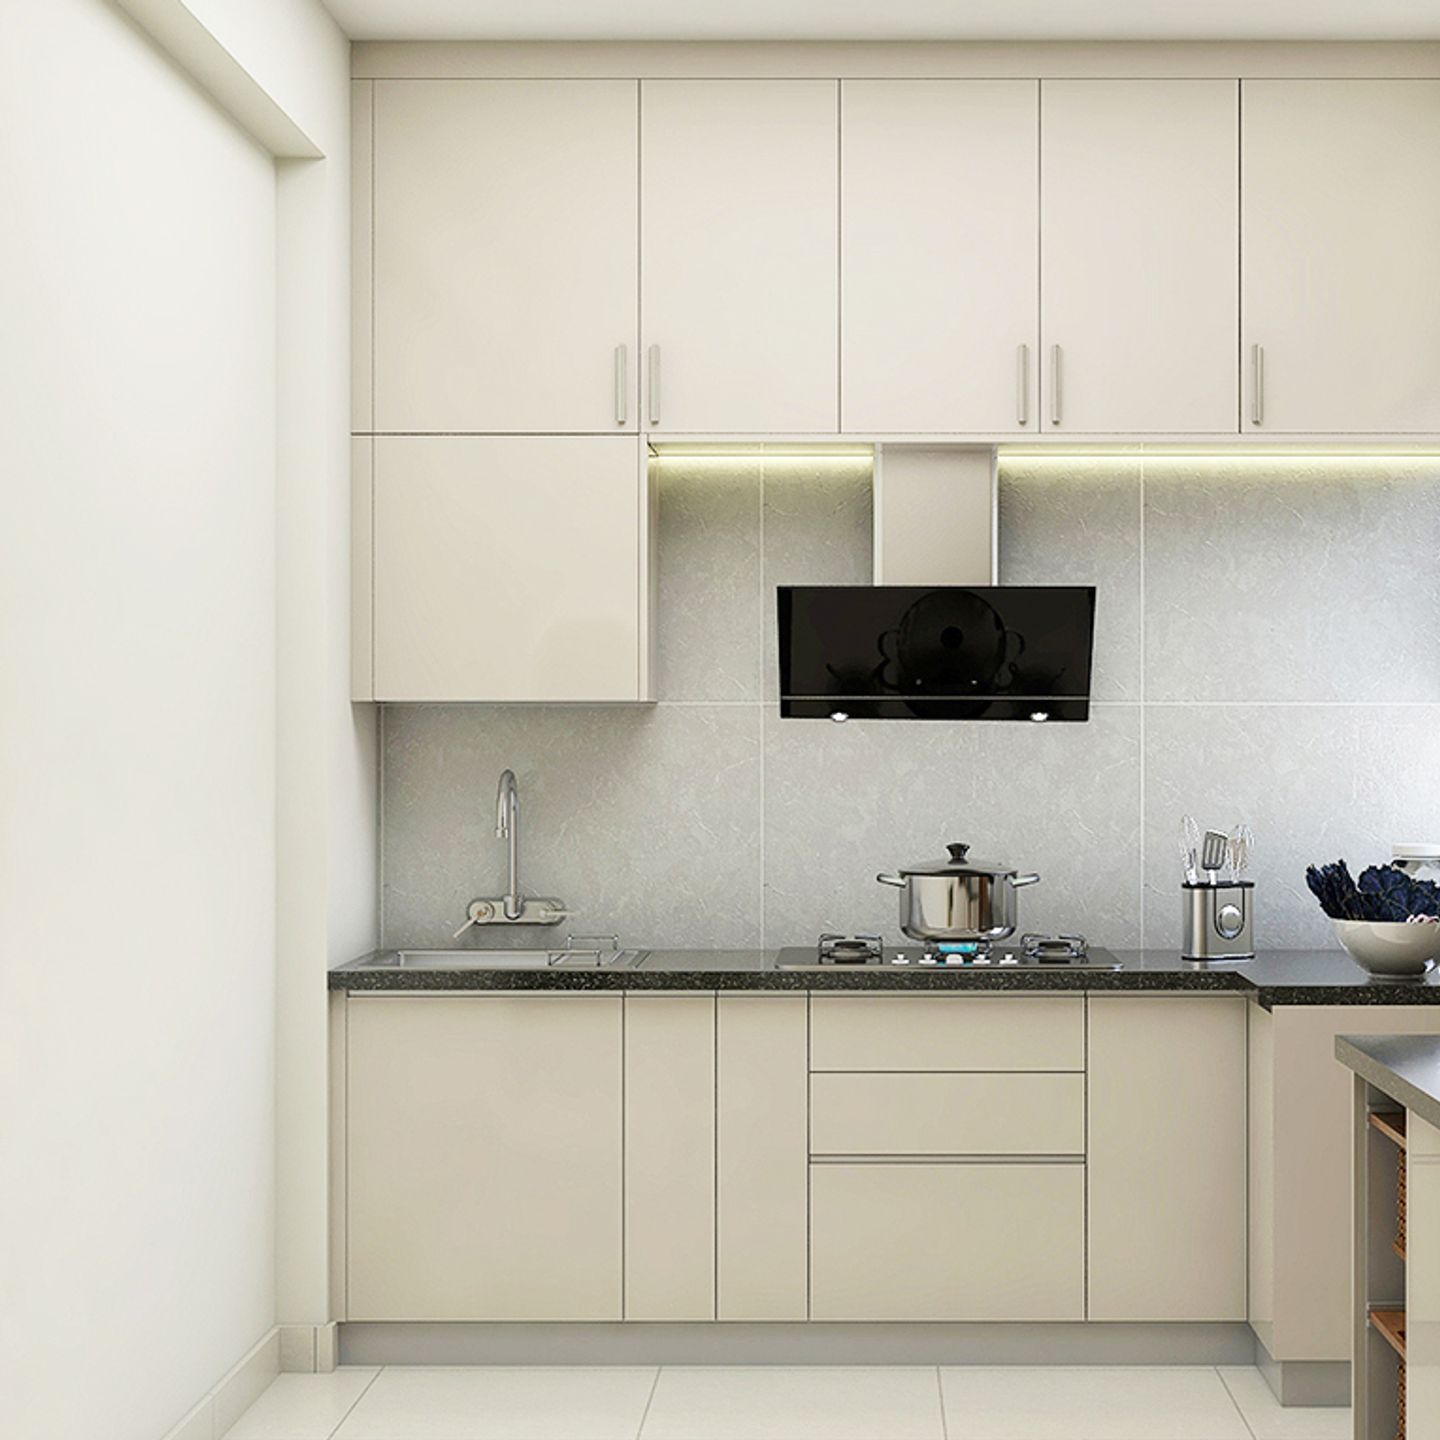 L-Shaped Kitchen Design With Loft Storage - Livspace